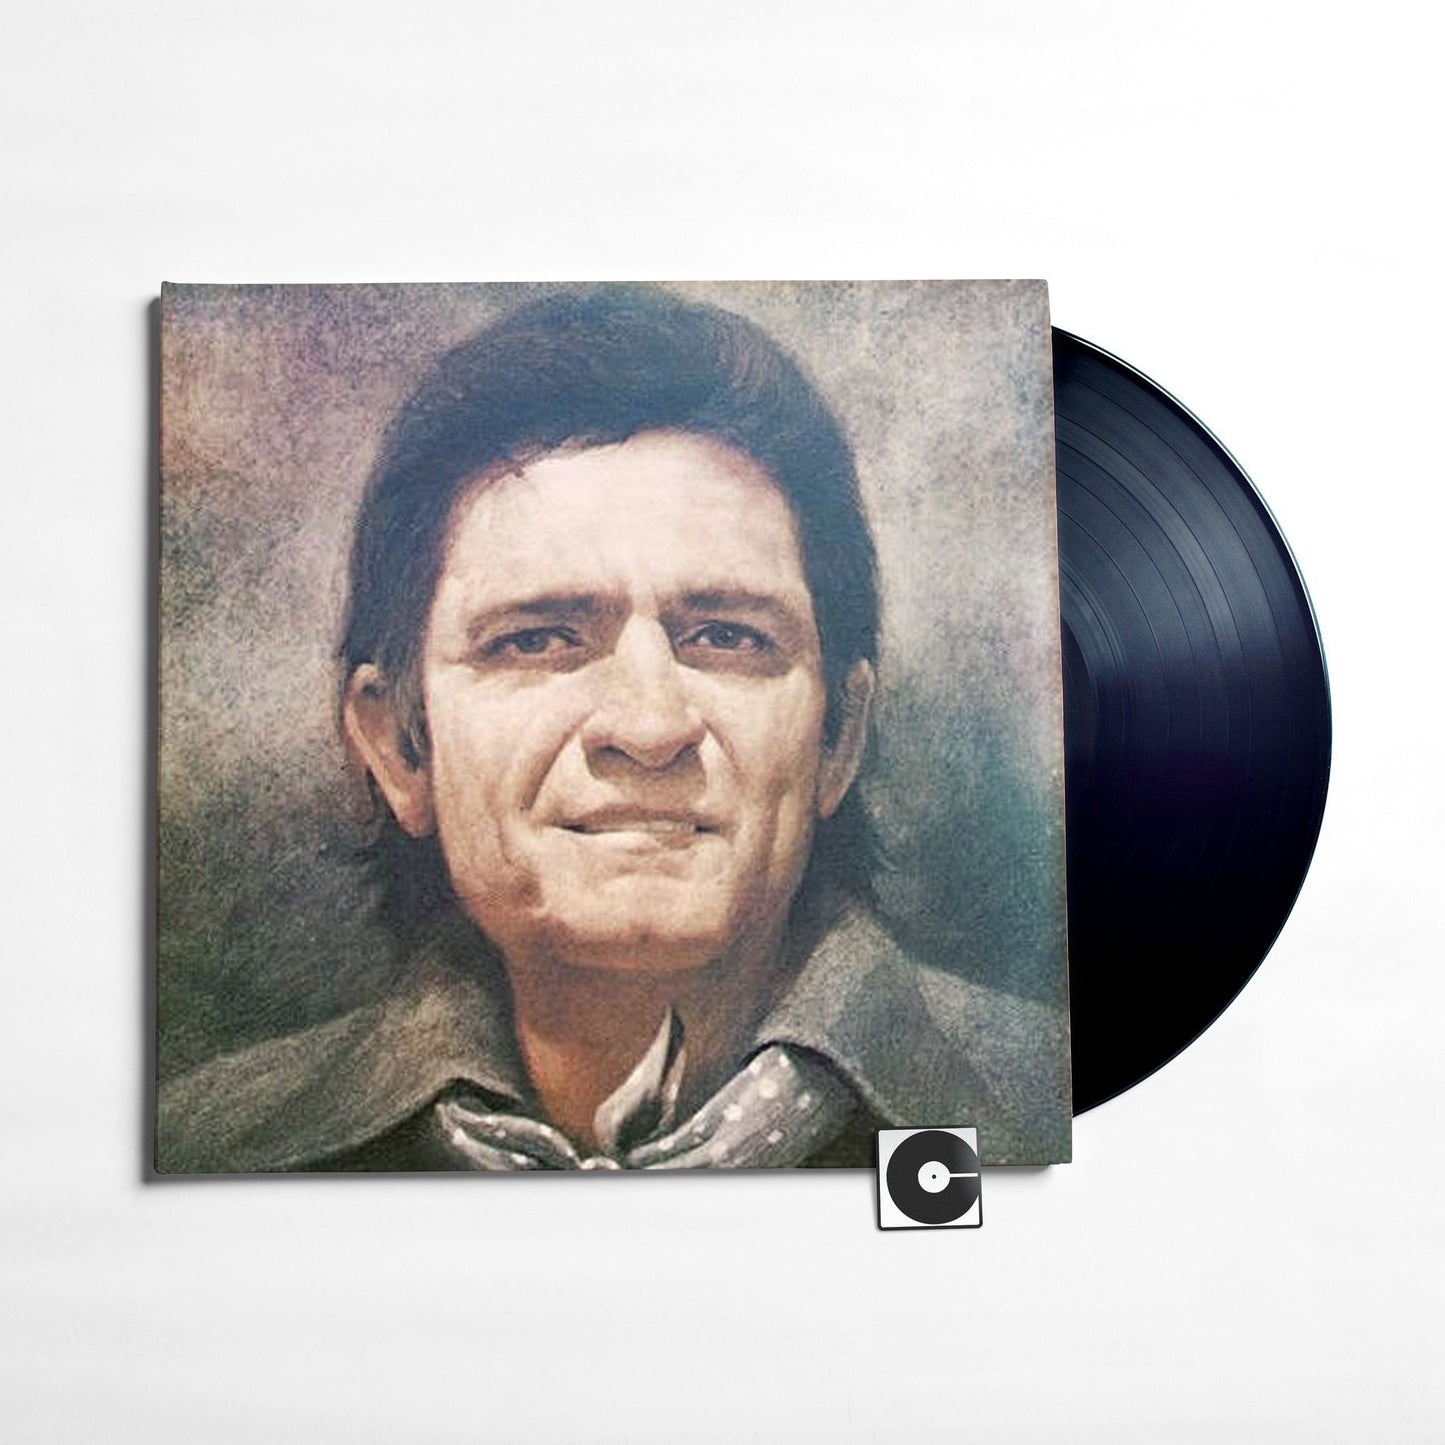 Johnny Cash - "Greatest Hits Vol 2"